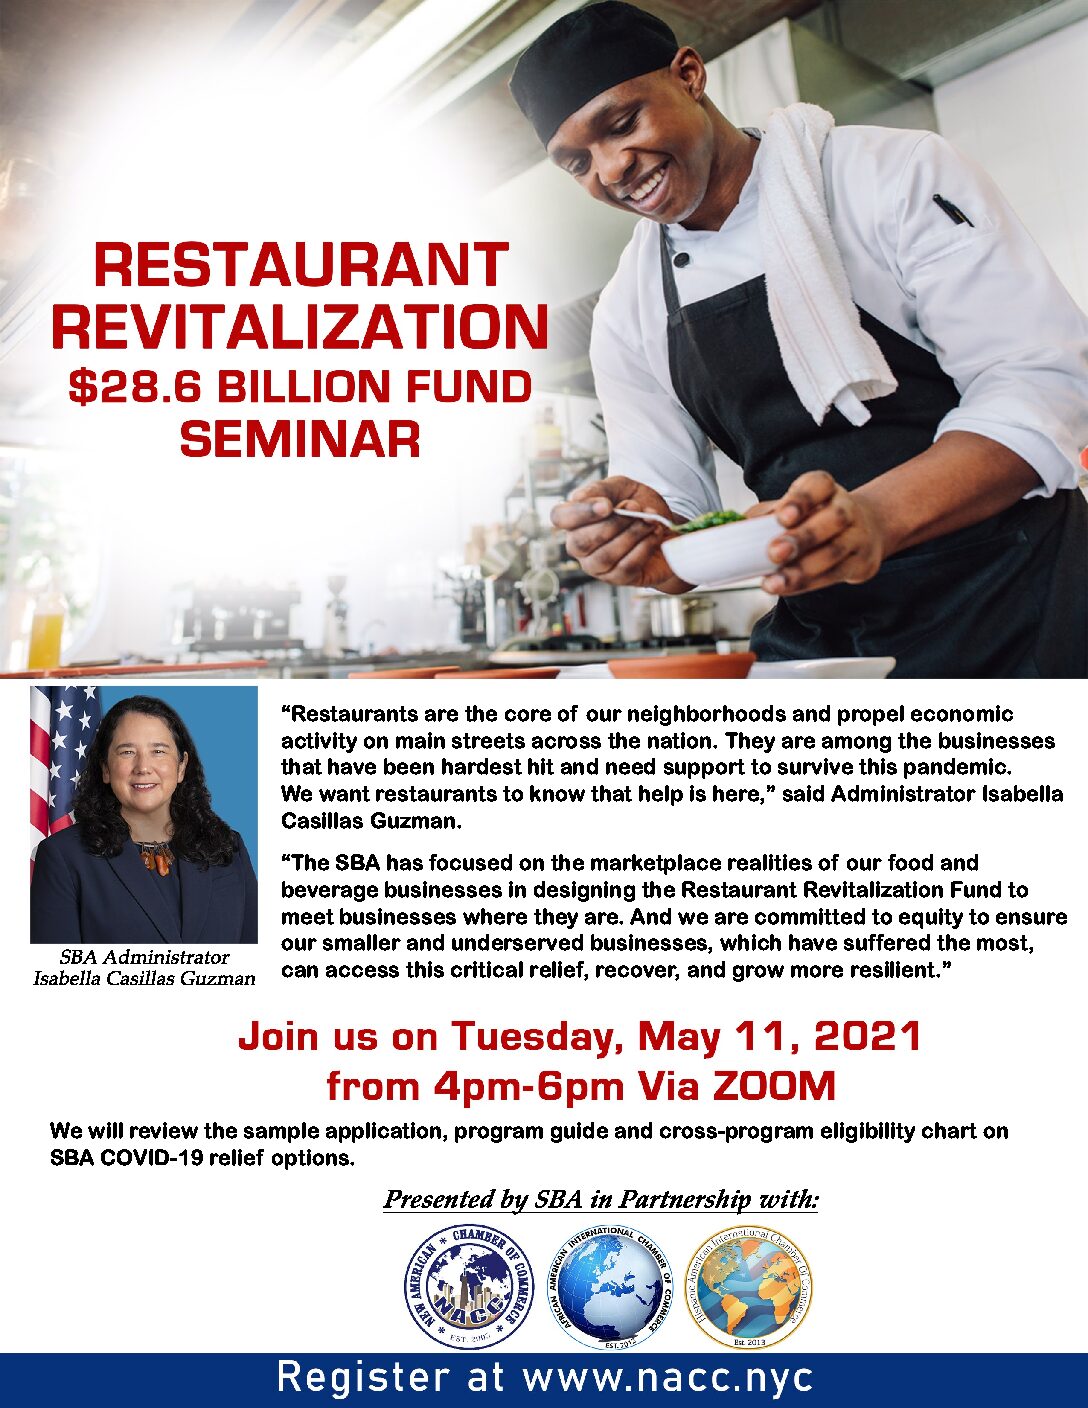 Restaurant Revitalization seminar